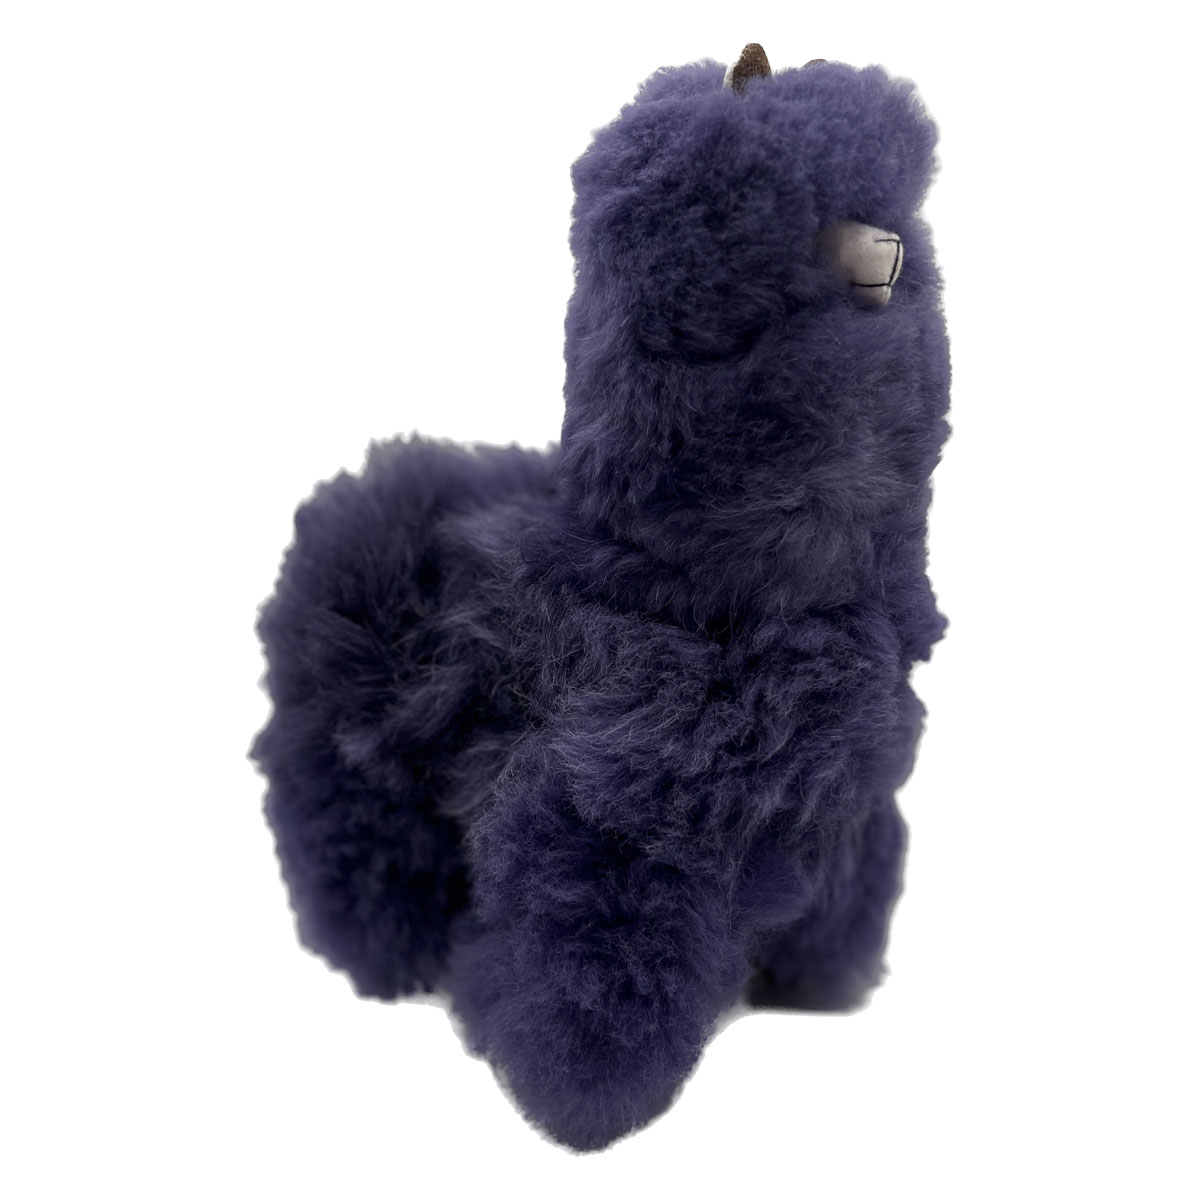 Buy Alpaca Plush and Stuffed Animals Online | Made of Alpaca Fur